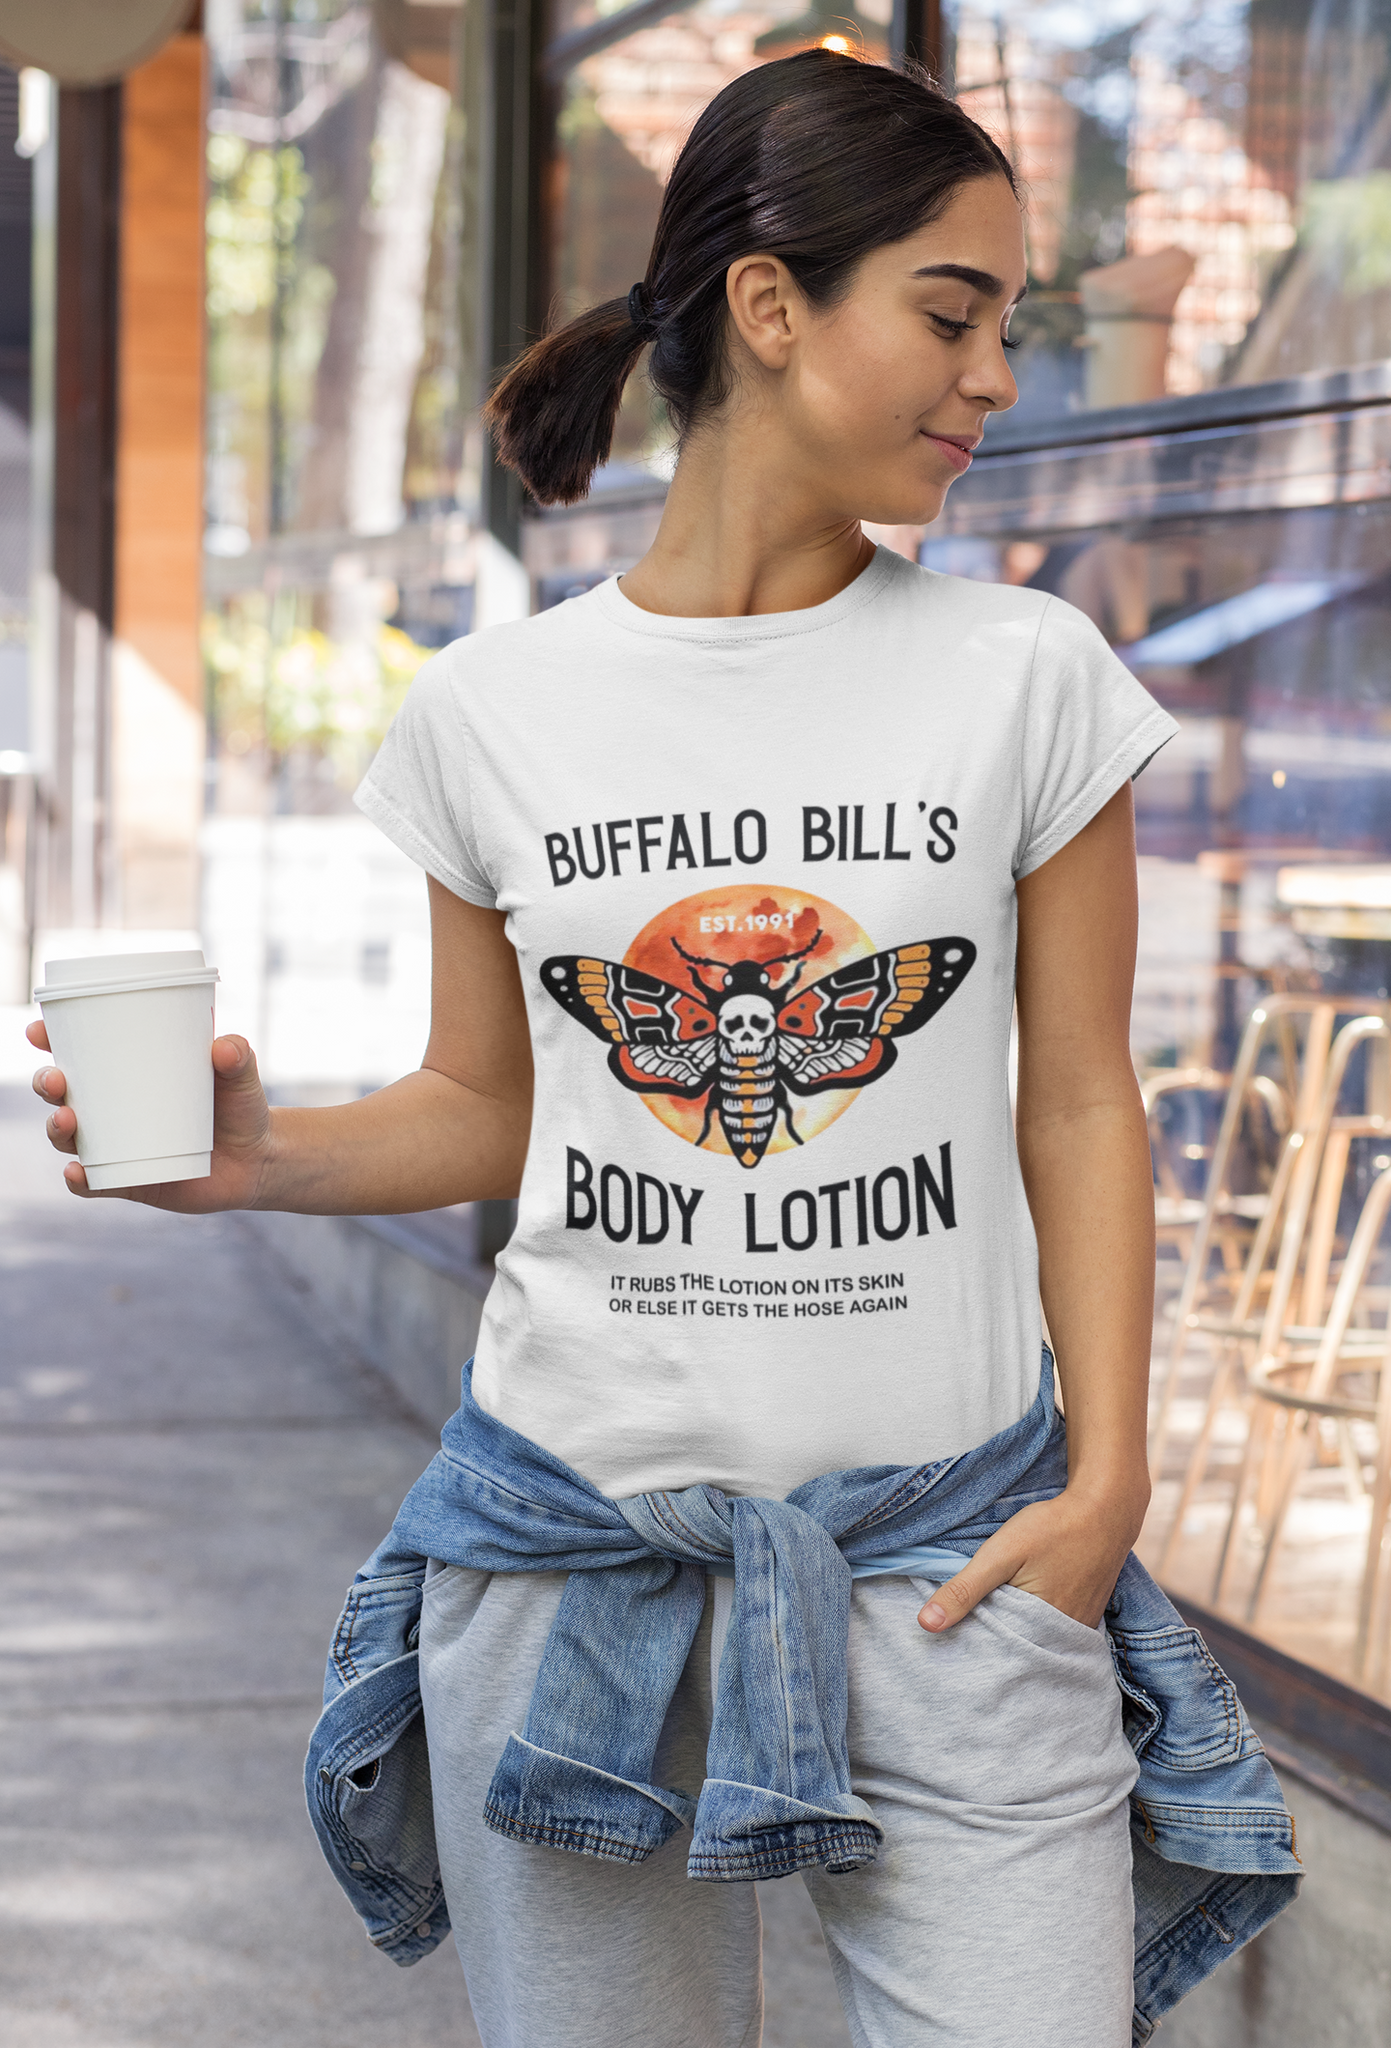 Silence Of The Lamb Tshirt, Buffalo Bills Body Lotion T Shirt, It Rubs The Lotion On Its Skin Shirt, Halloween Gifts